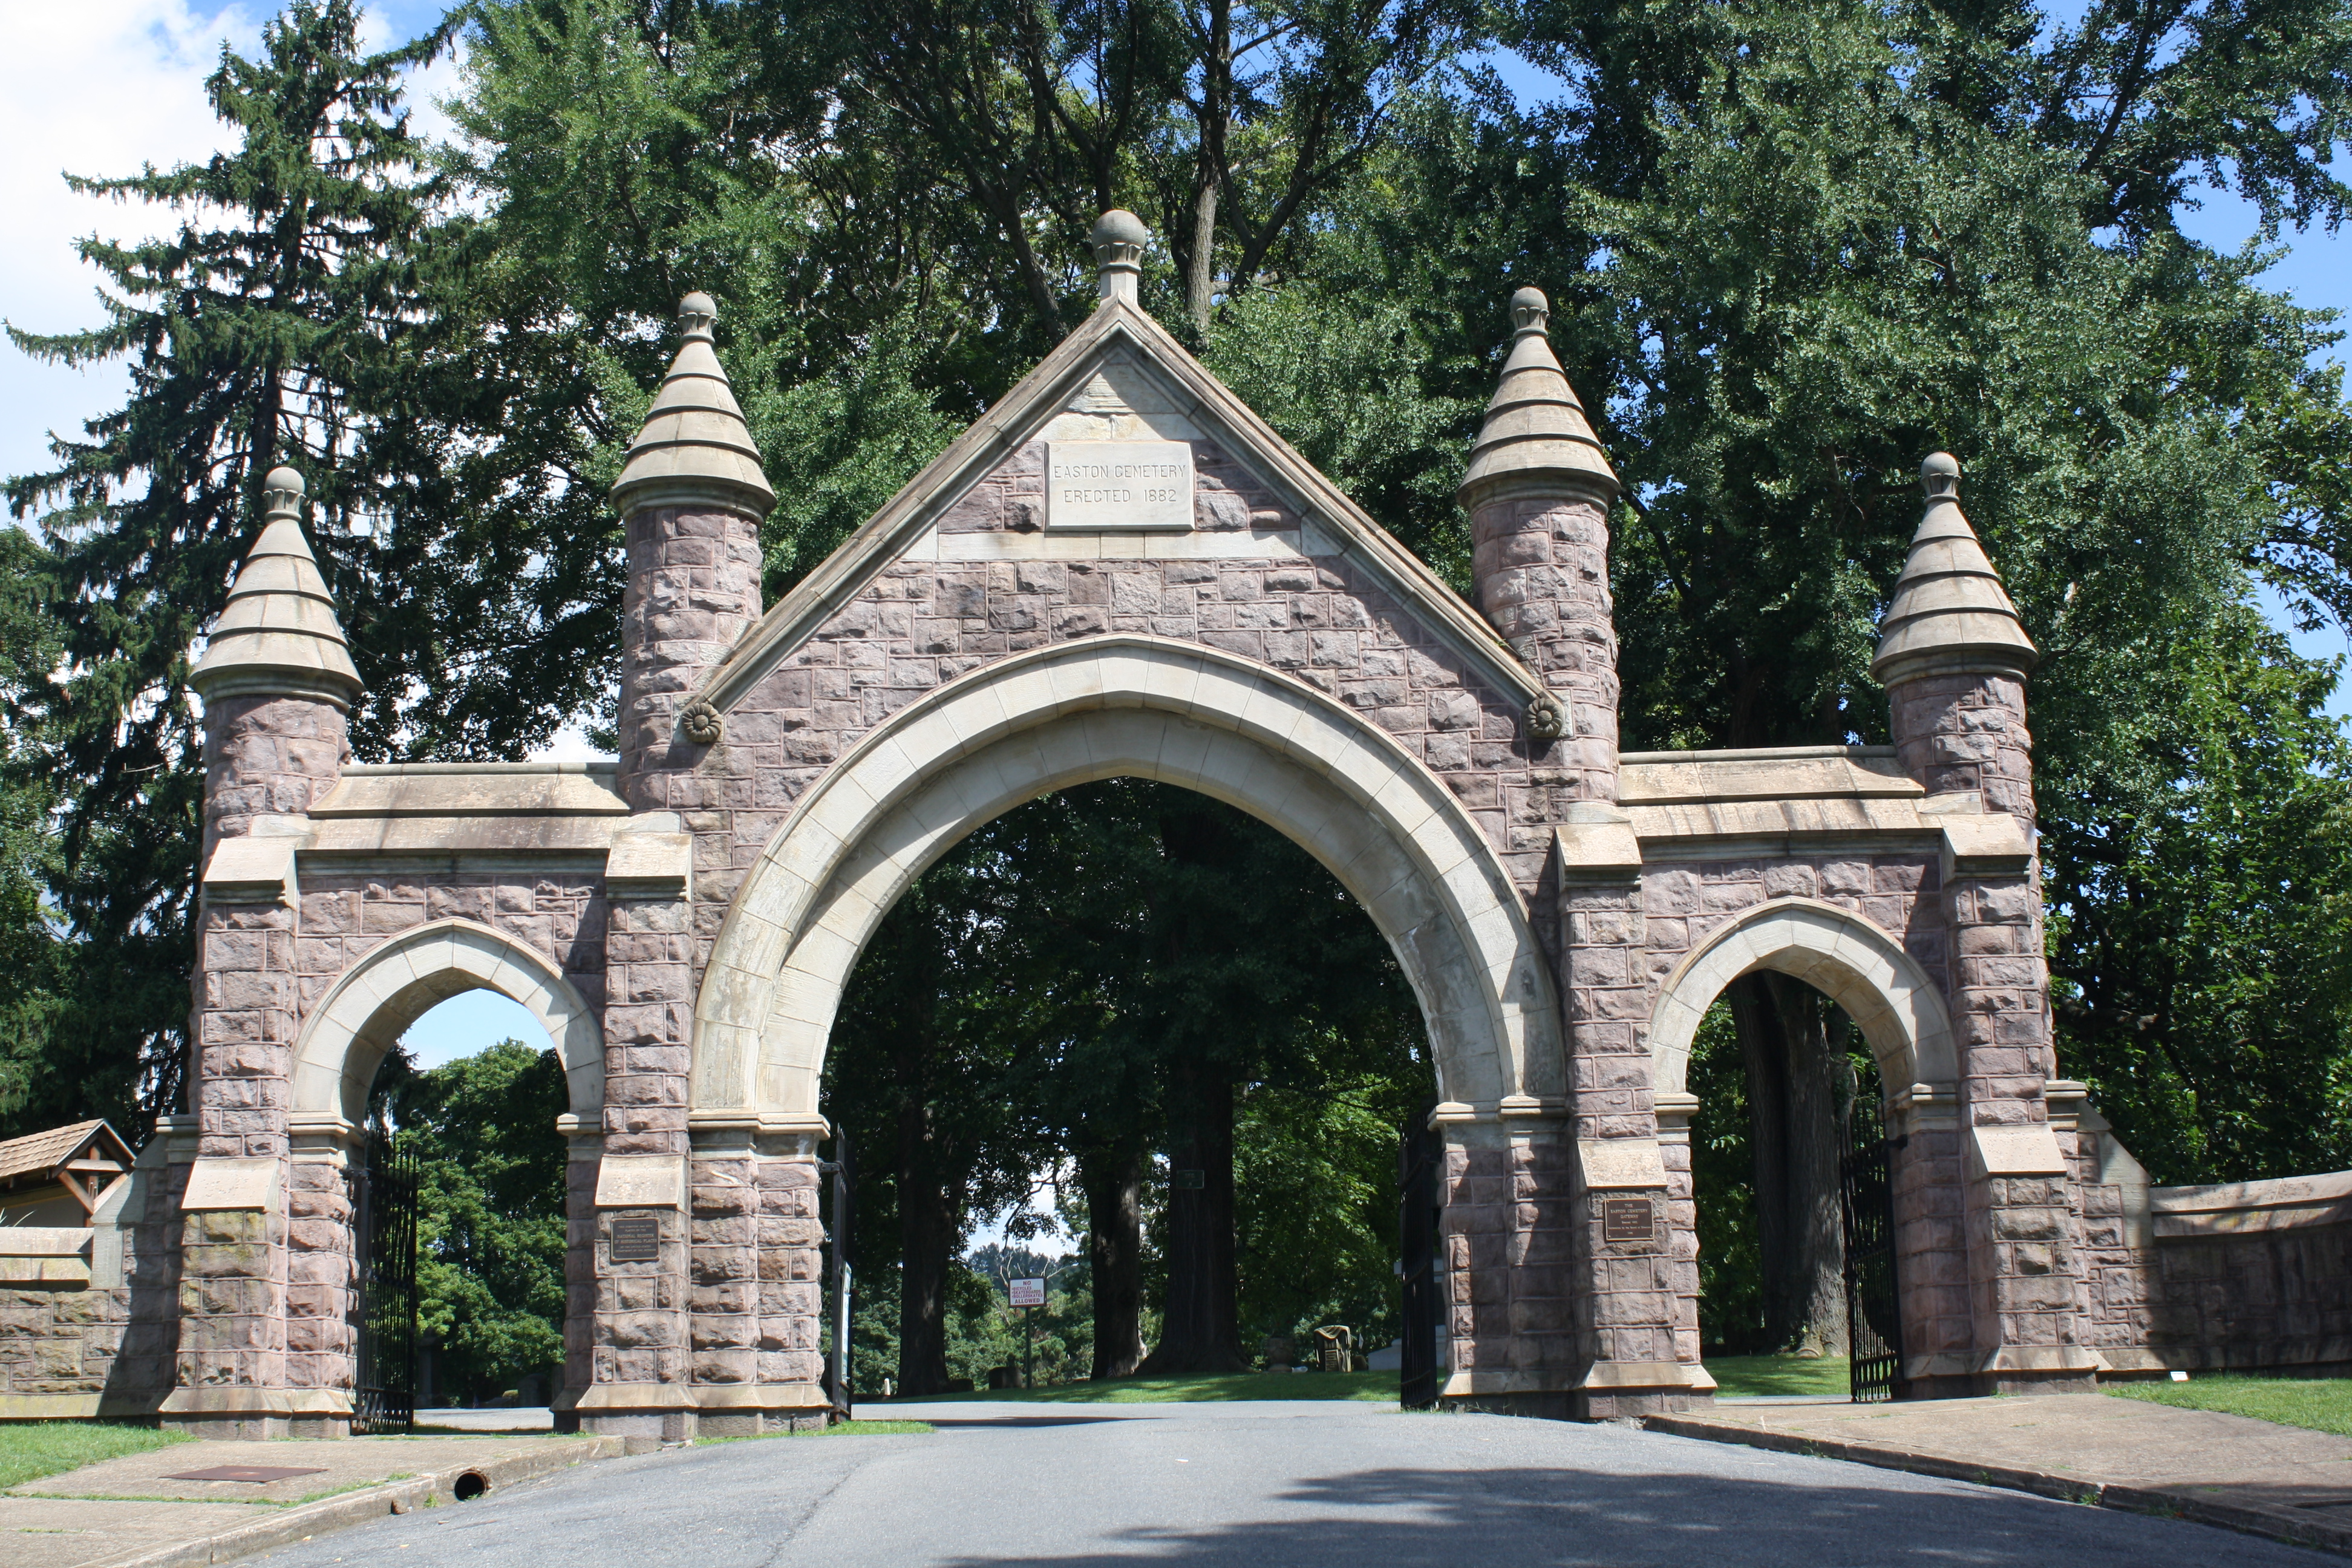 The entrance to Easton Cemetery. (Shuvaev/Wikipedia)